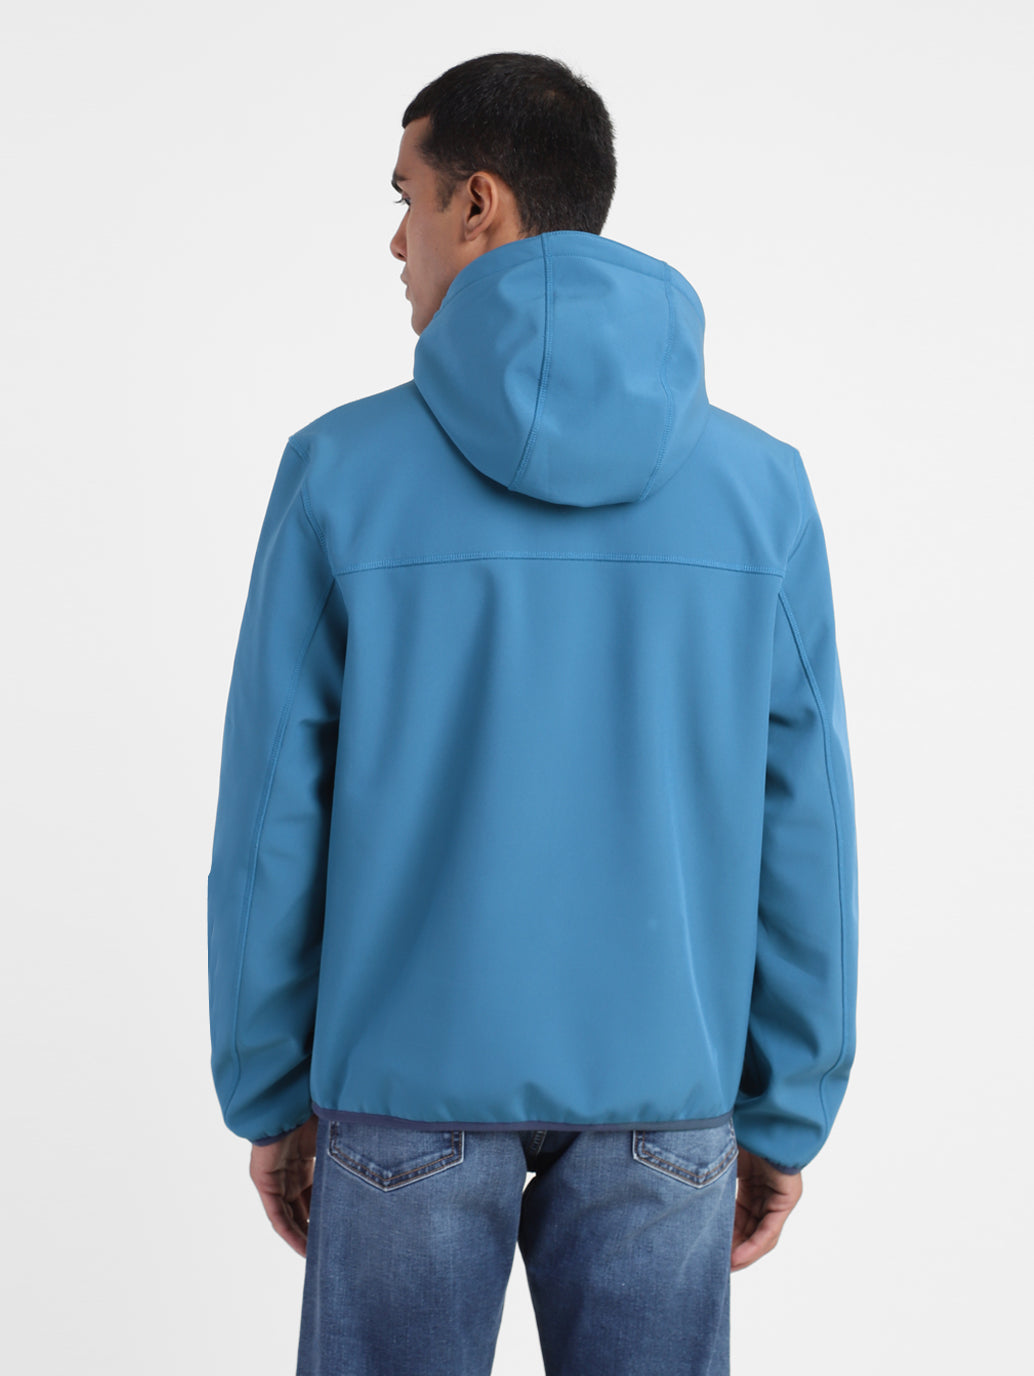 Men's Colorblock Hooded Jackets